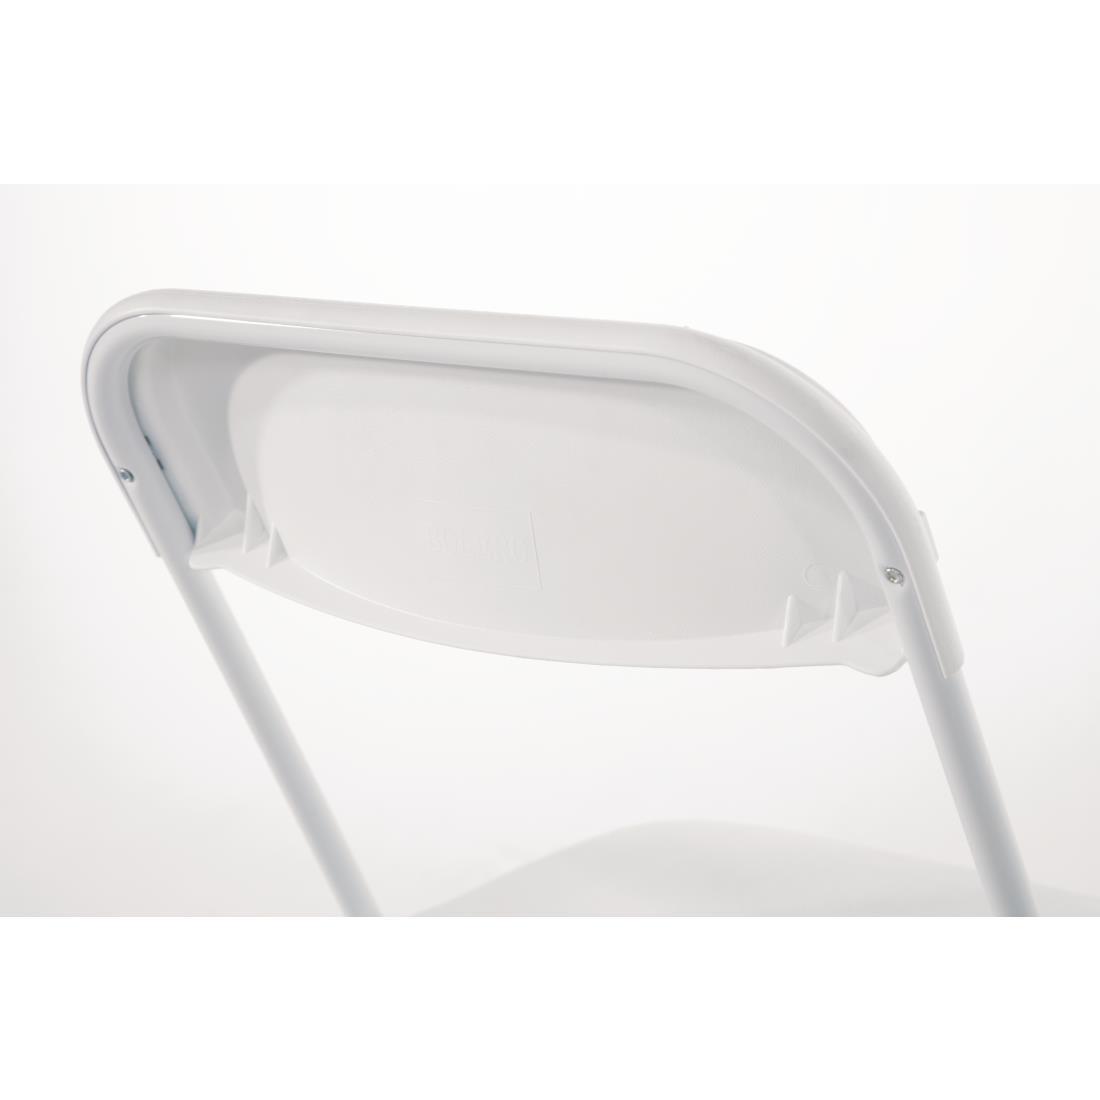 Bolero PP Folding Chairs White (Pack of 10) - GD387  - 7